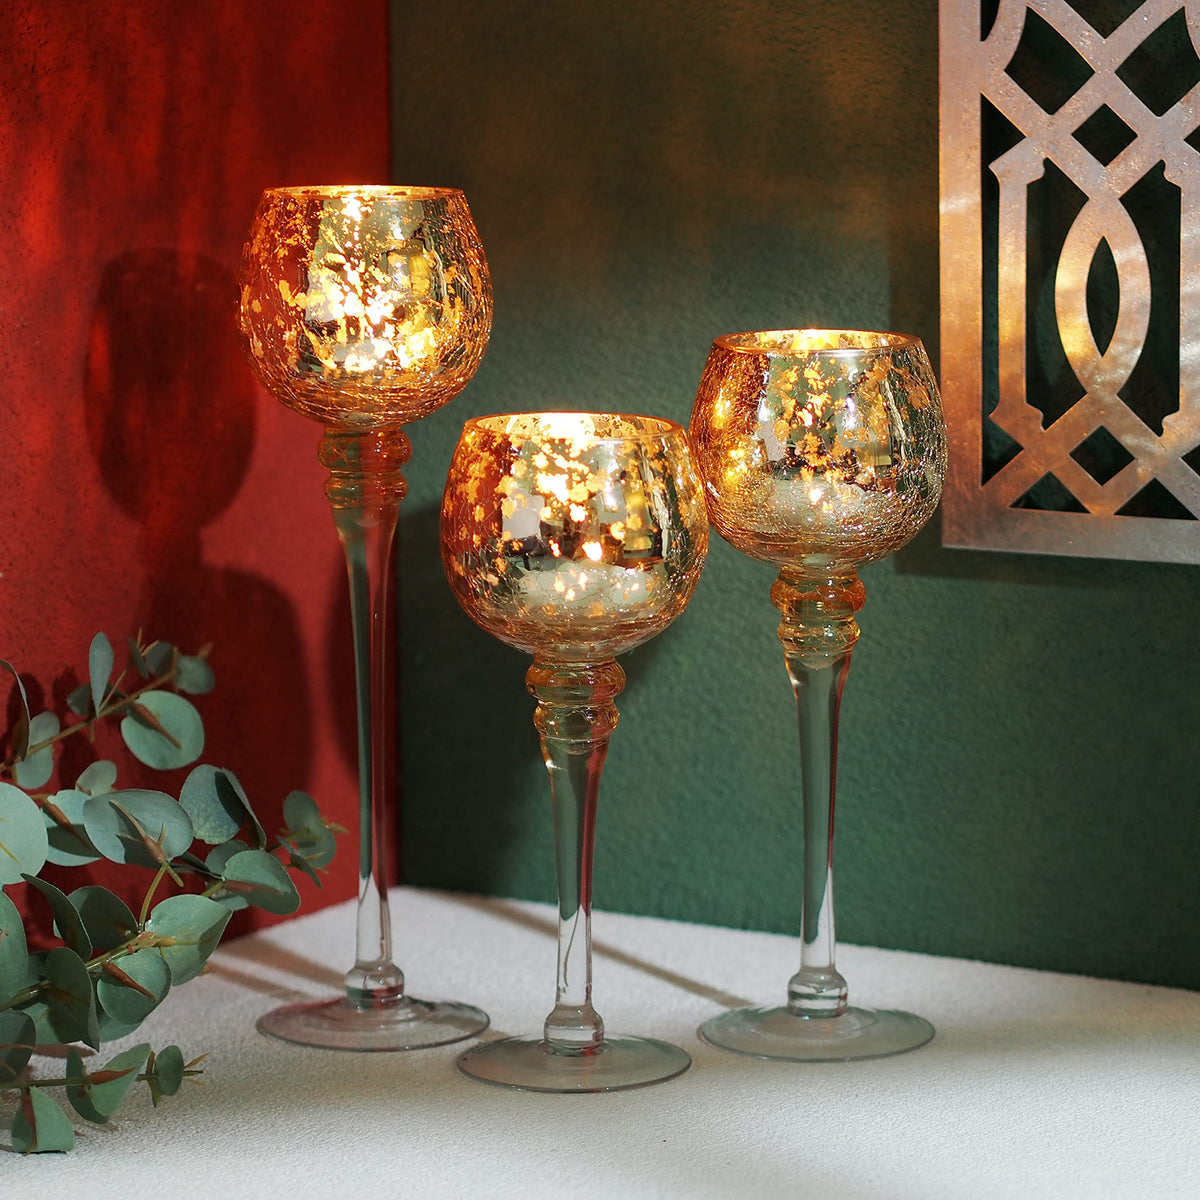 HOSLEY® Long Stem Glass Crackle Tealight Holders, Metallic Gold Finish, Set of 3,   9", 10" & 12"High